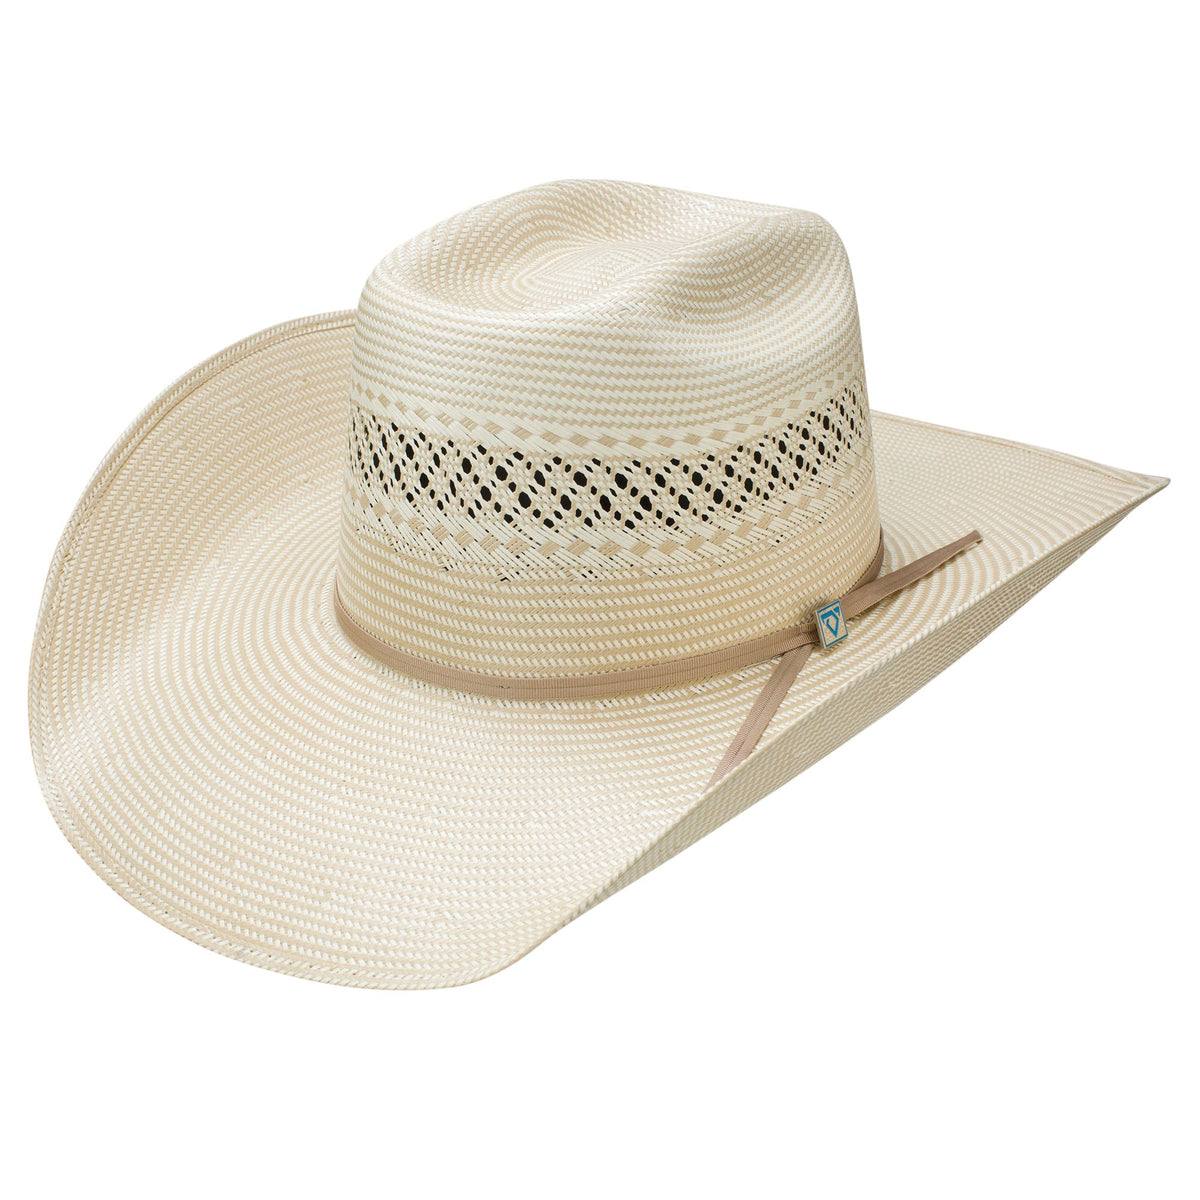 Cody Johnson by Resistol Cojo Special Straw Hat